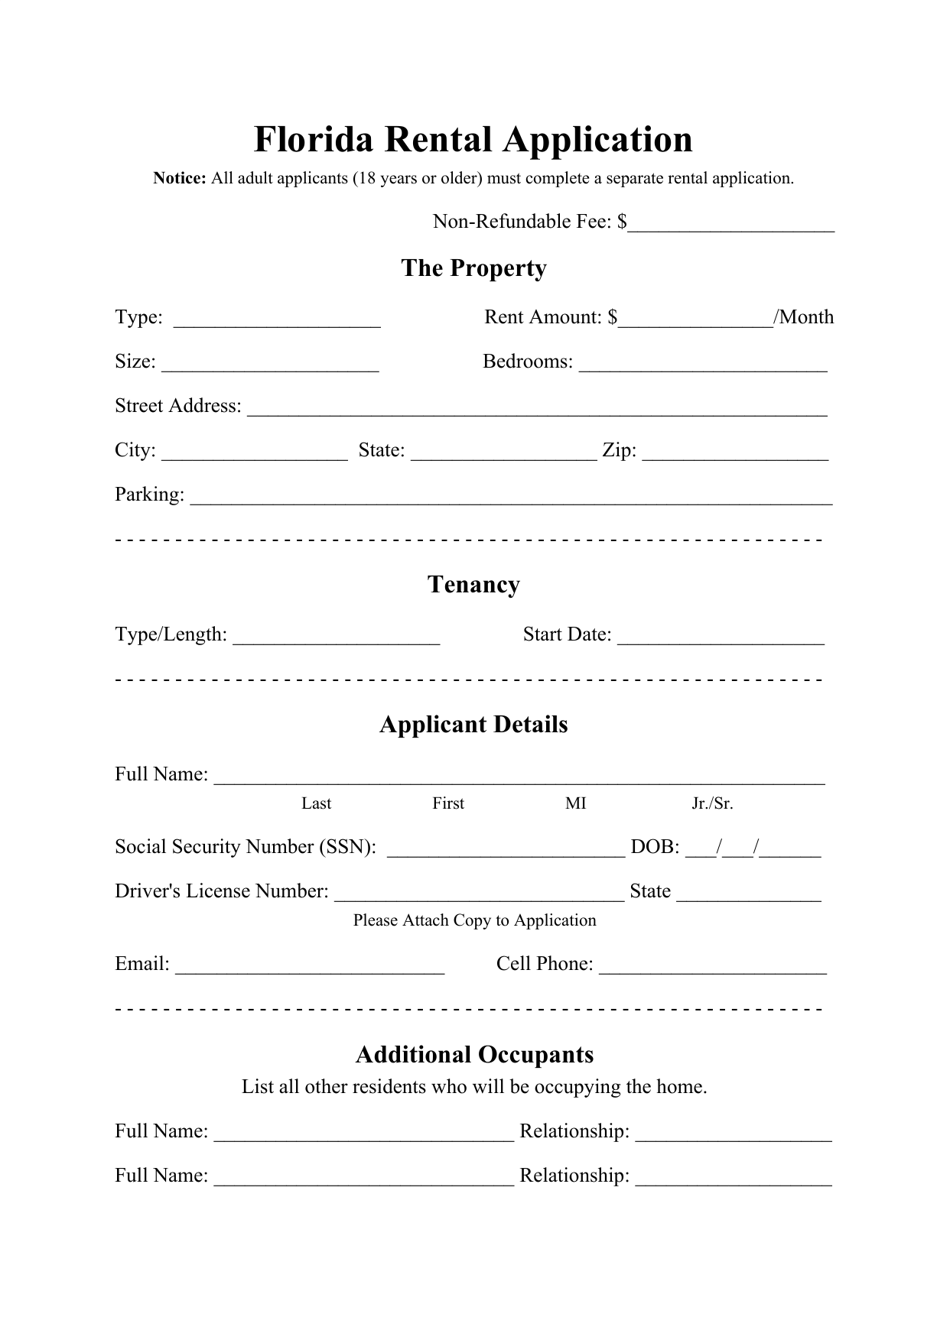 florida-rental-application-form-download-printable-pdf-templateroller